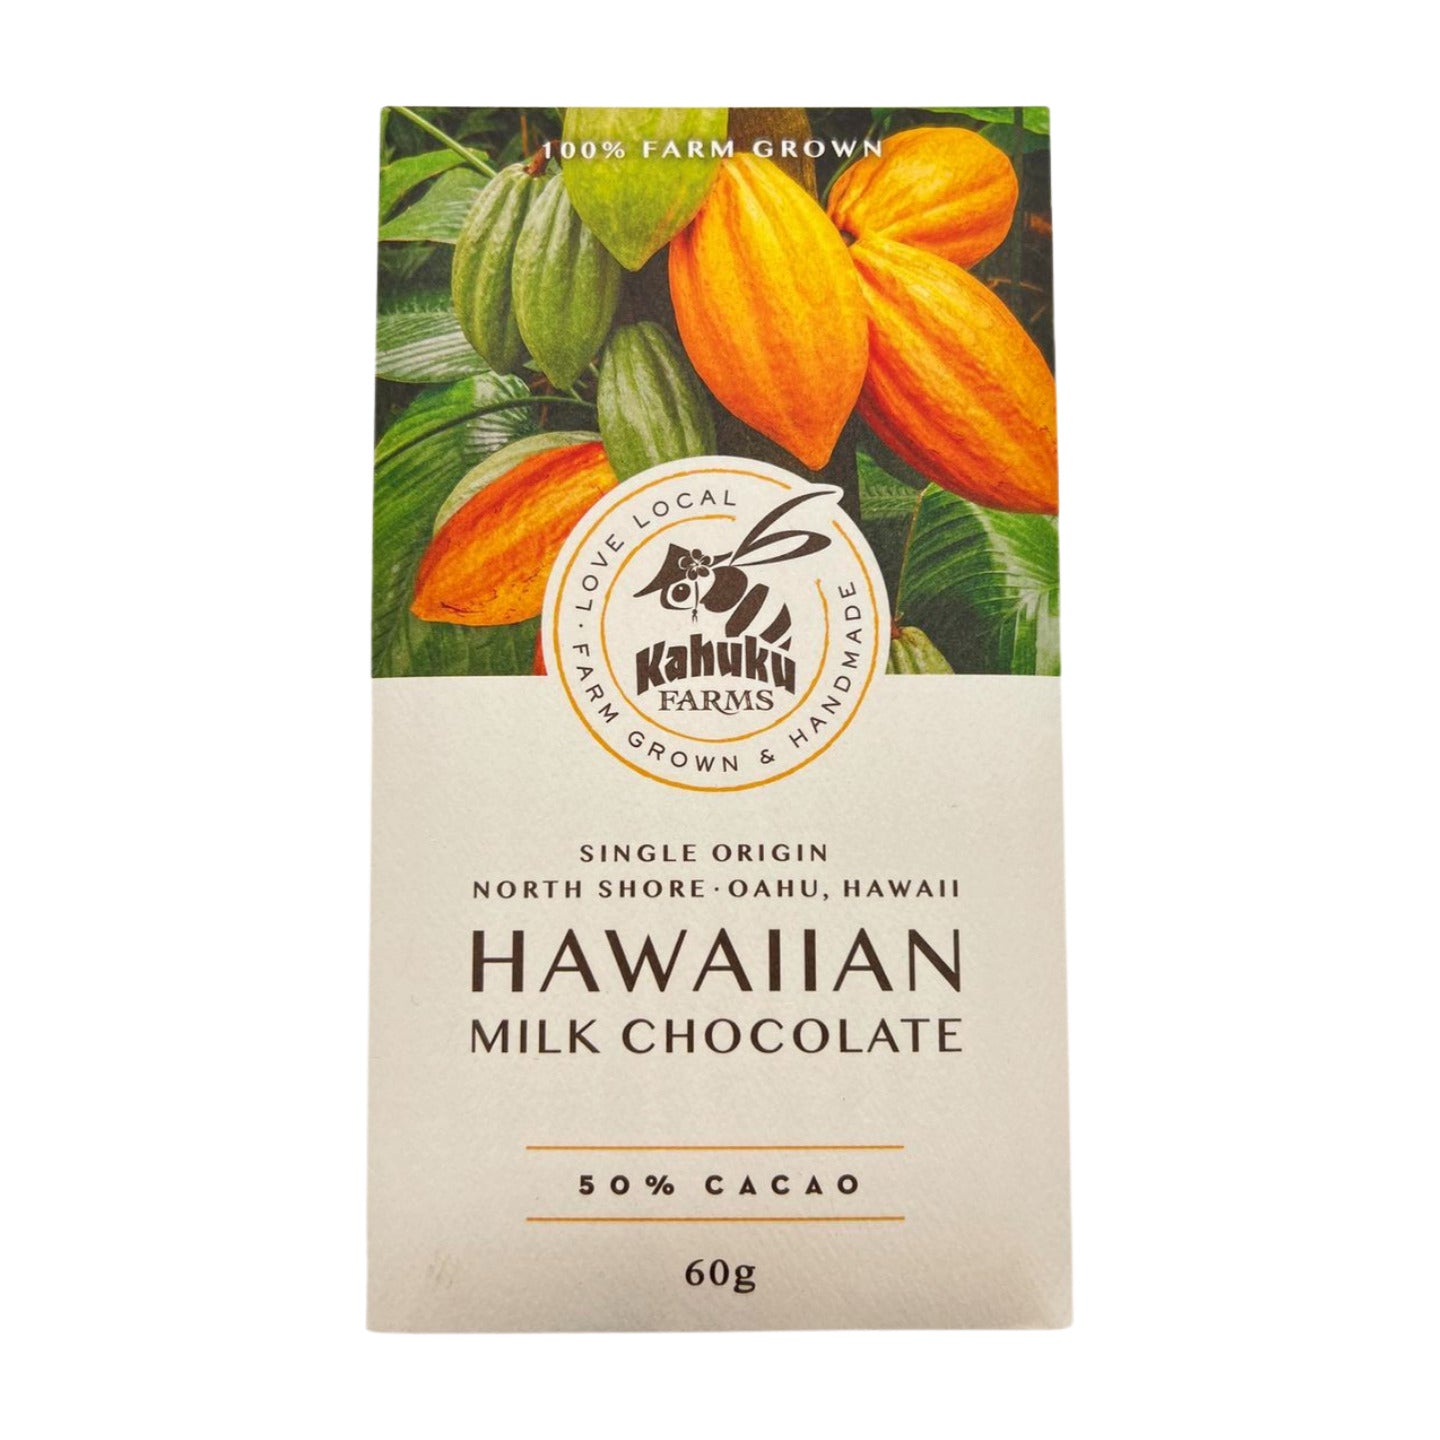 Pop-Up Mākeke - Kahuku Farms - Hawaiian Milk Chocolate (50%) - Front View